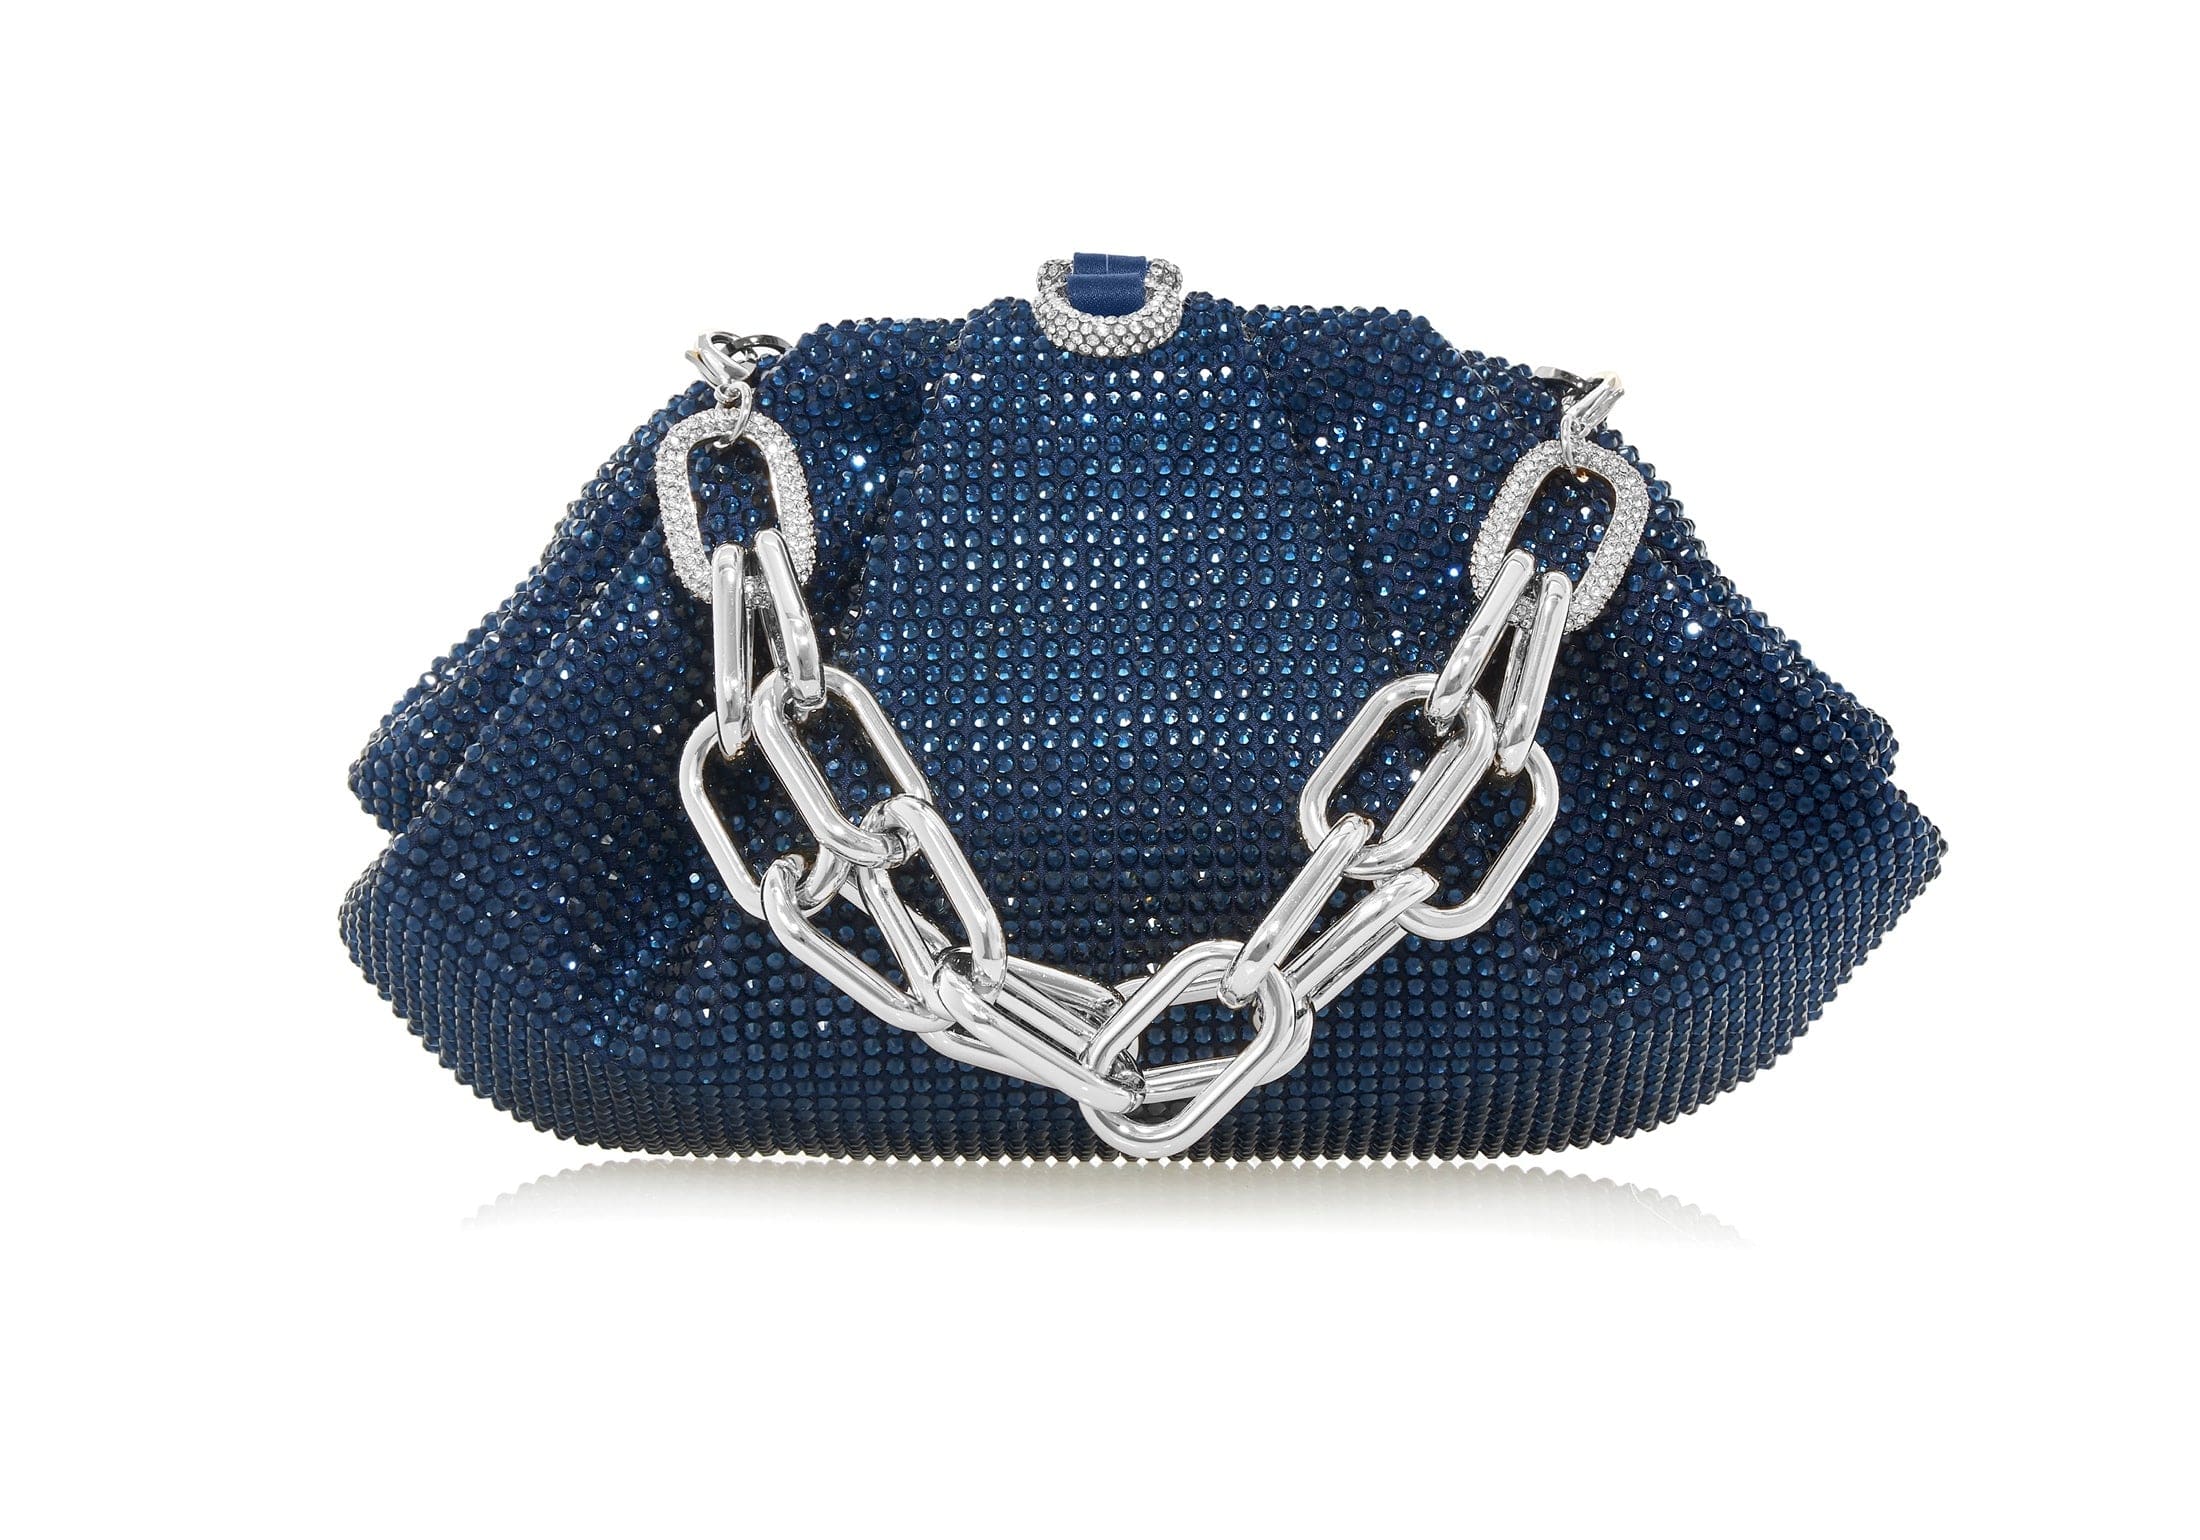 Book clutch purse - Navy blue embroidered handbag - Fairytale purse – VR  handmade